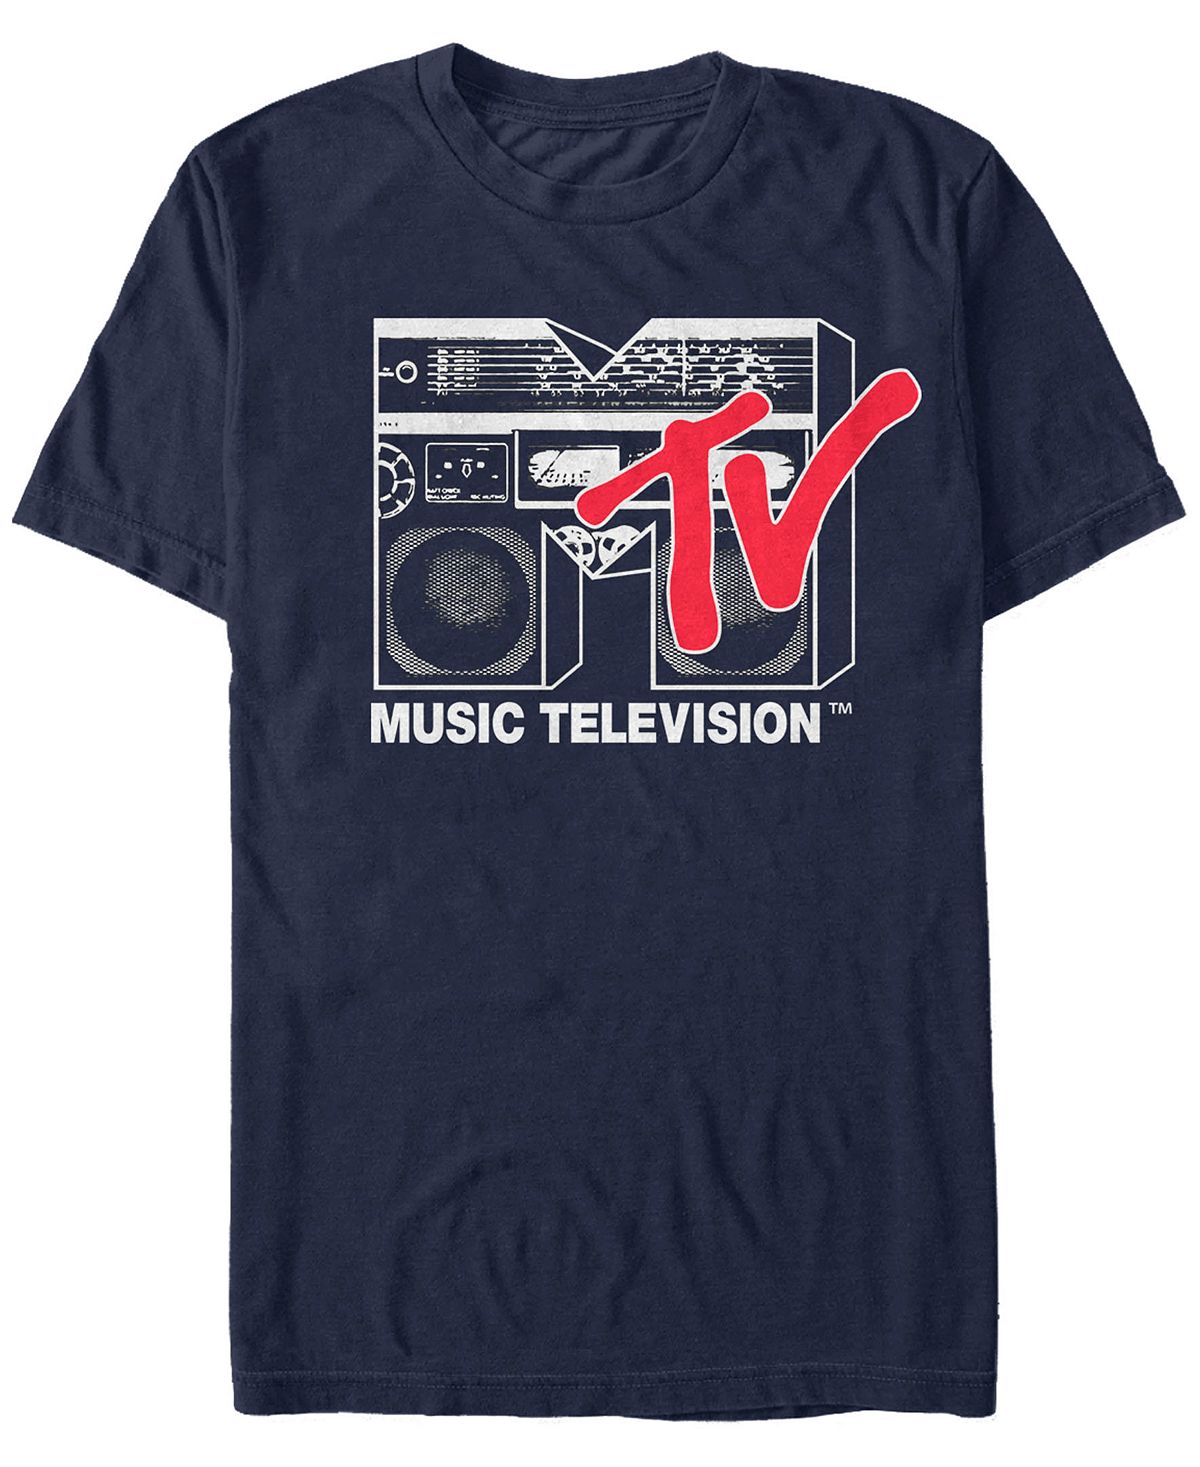 Мужская футболка с коротким рукавом в стиле бумбокс с логотипом 80-х, черно-белая Fifth Sun, синий пульт huayu для телевизора mystery mtv 3217lw